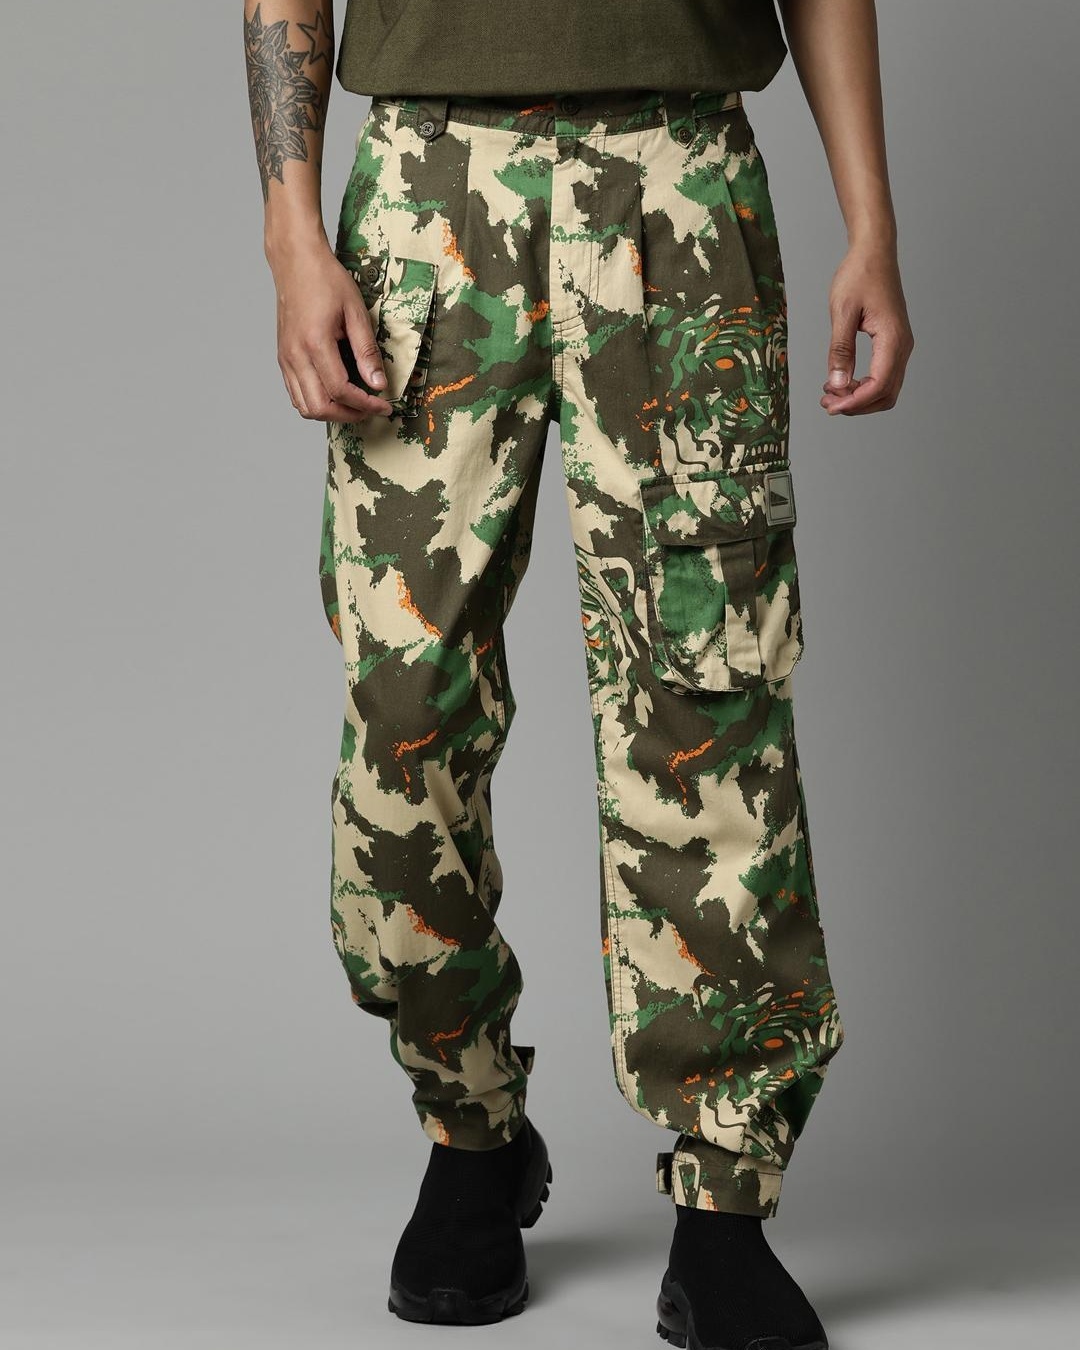 xiuh baggy pants womens camo cargo trousers casual pants combat camouflage  pants linen pants white s - Walmart.com